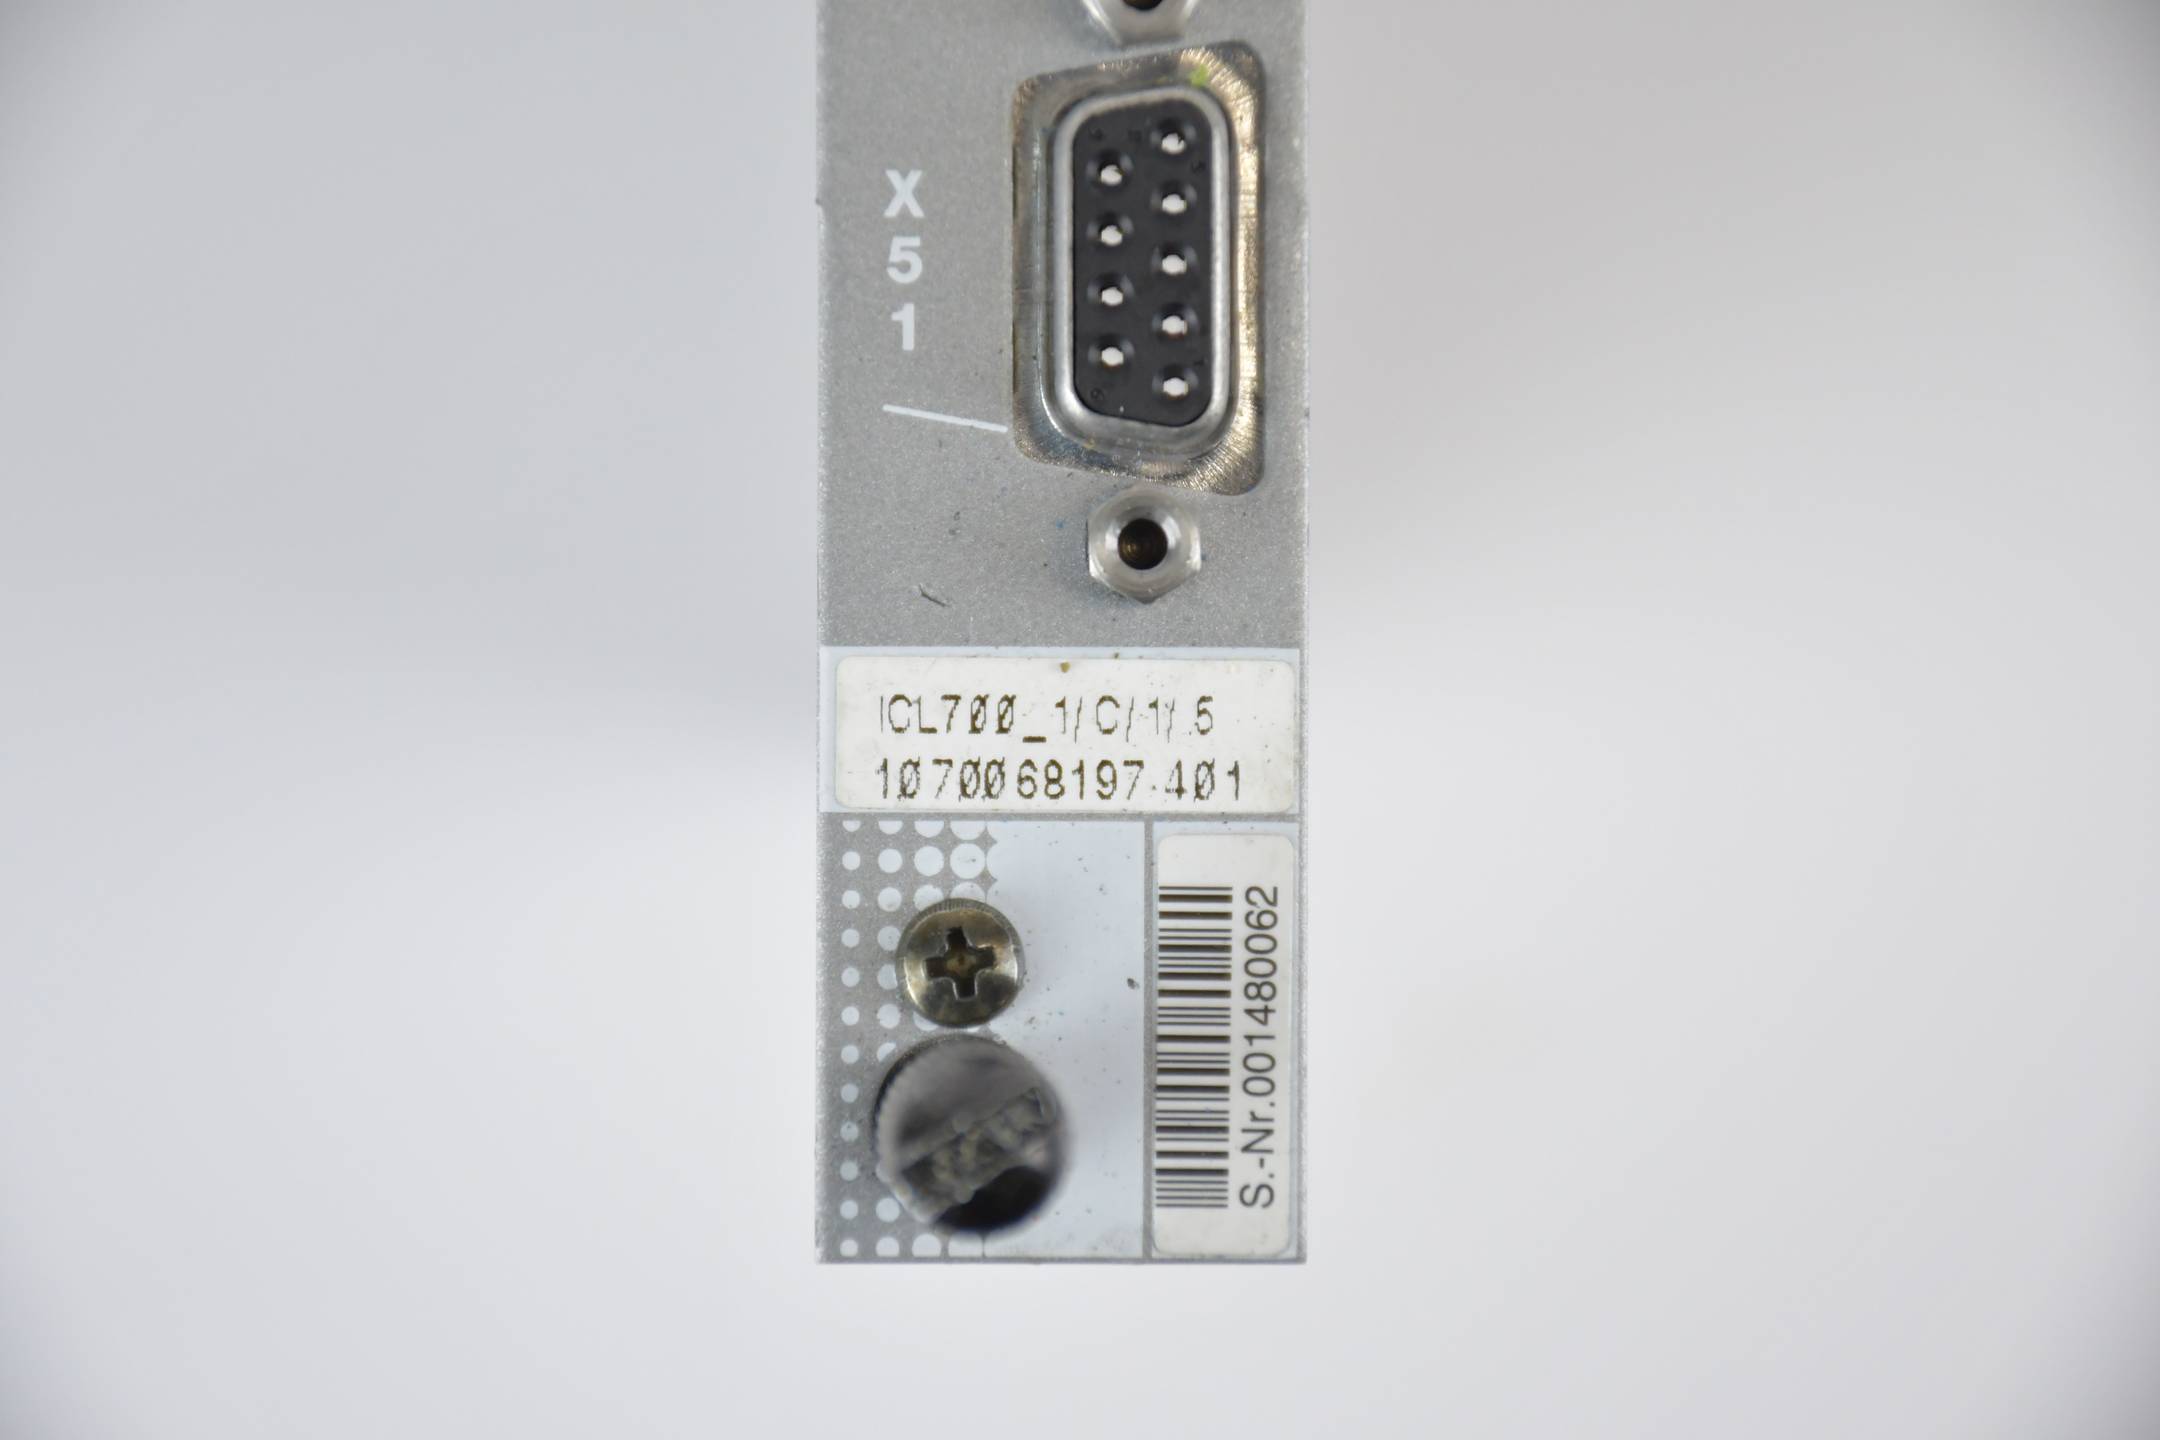 Bosch Indramat Rexroth Clear Output Modul ICL700_1/C/1/.5 ( 1070068197-401 )